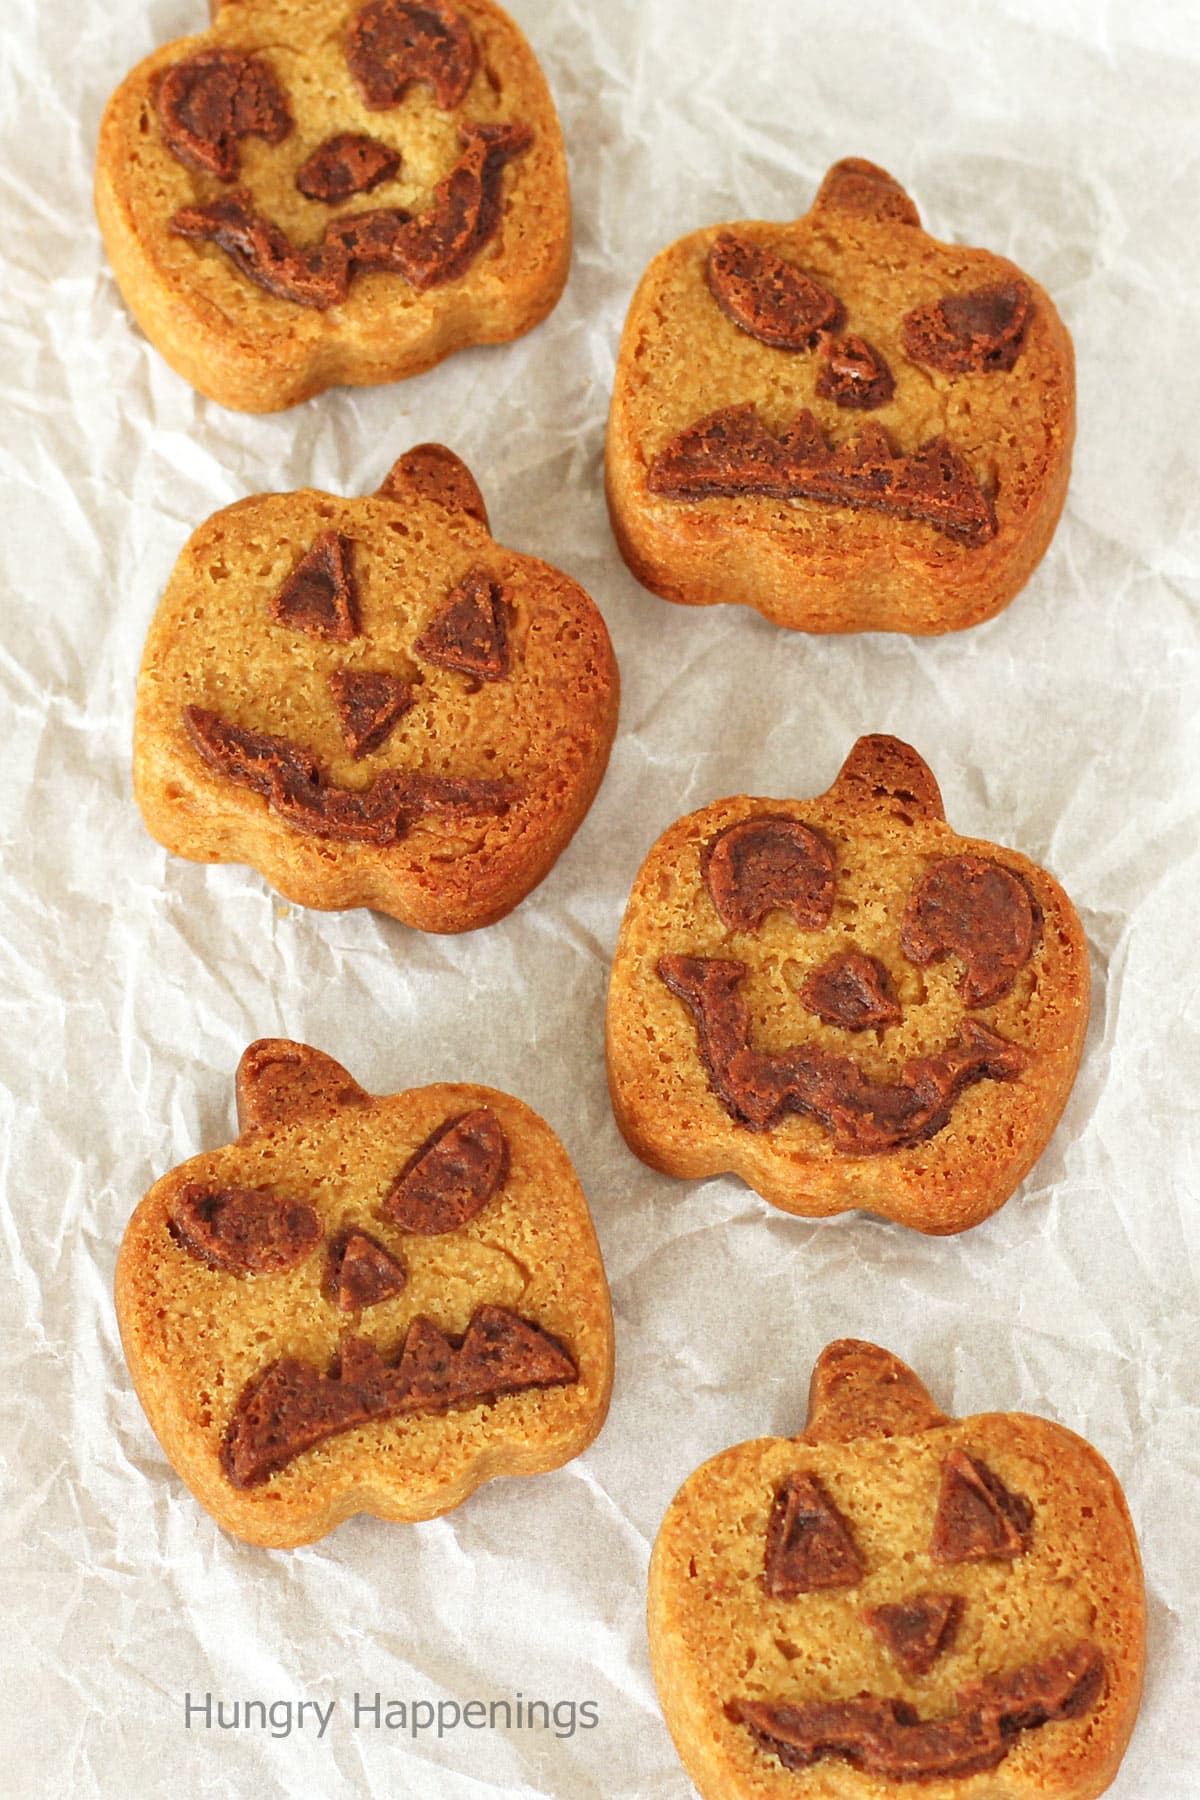 Jack-O-Lantern peanut butter cookies.